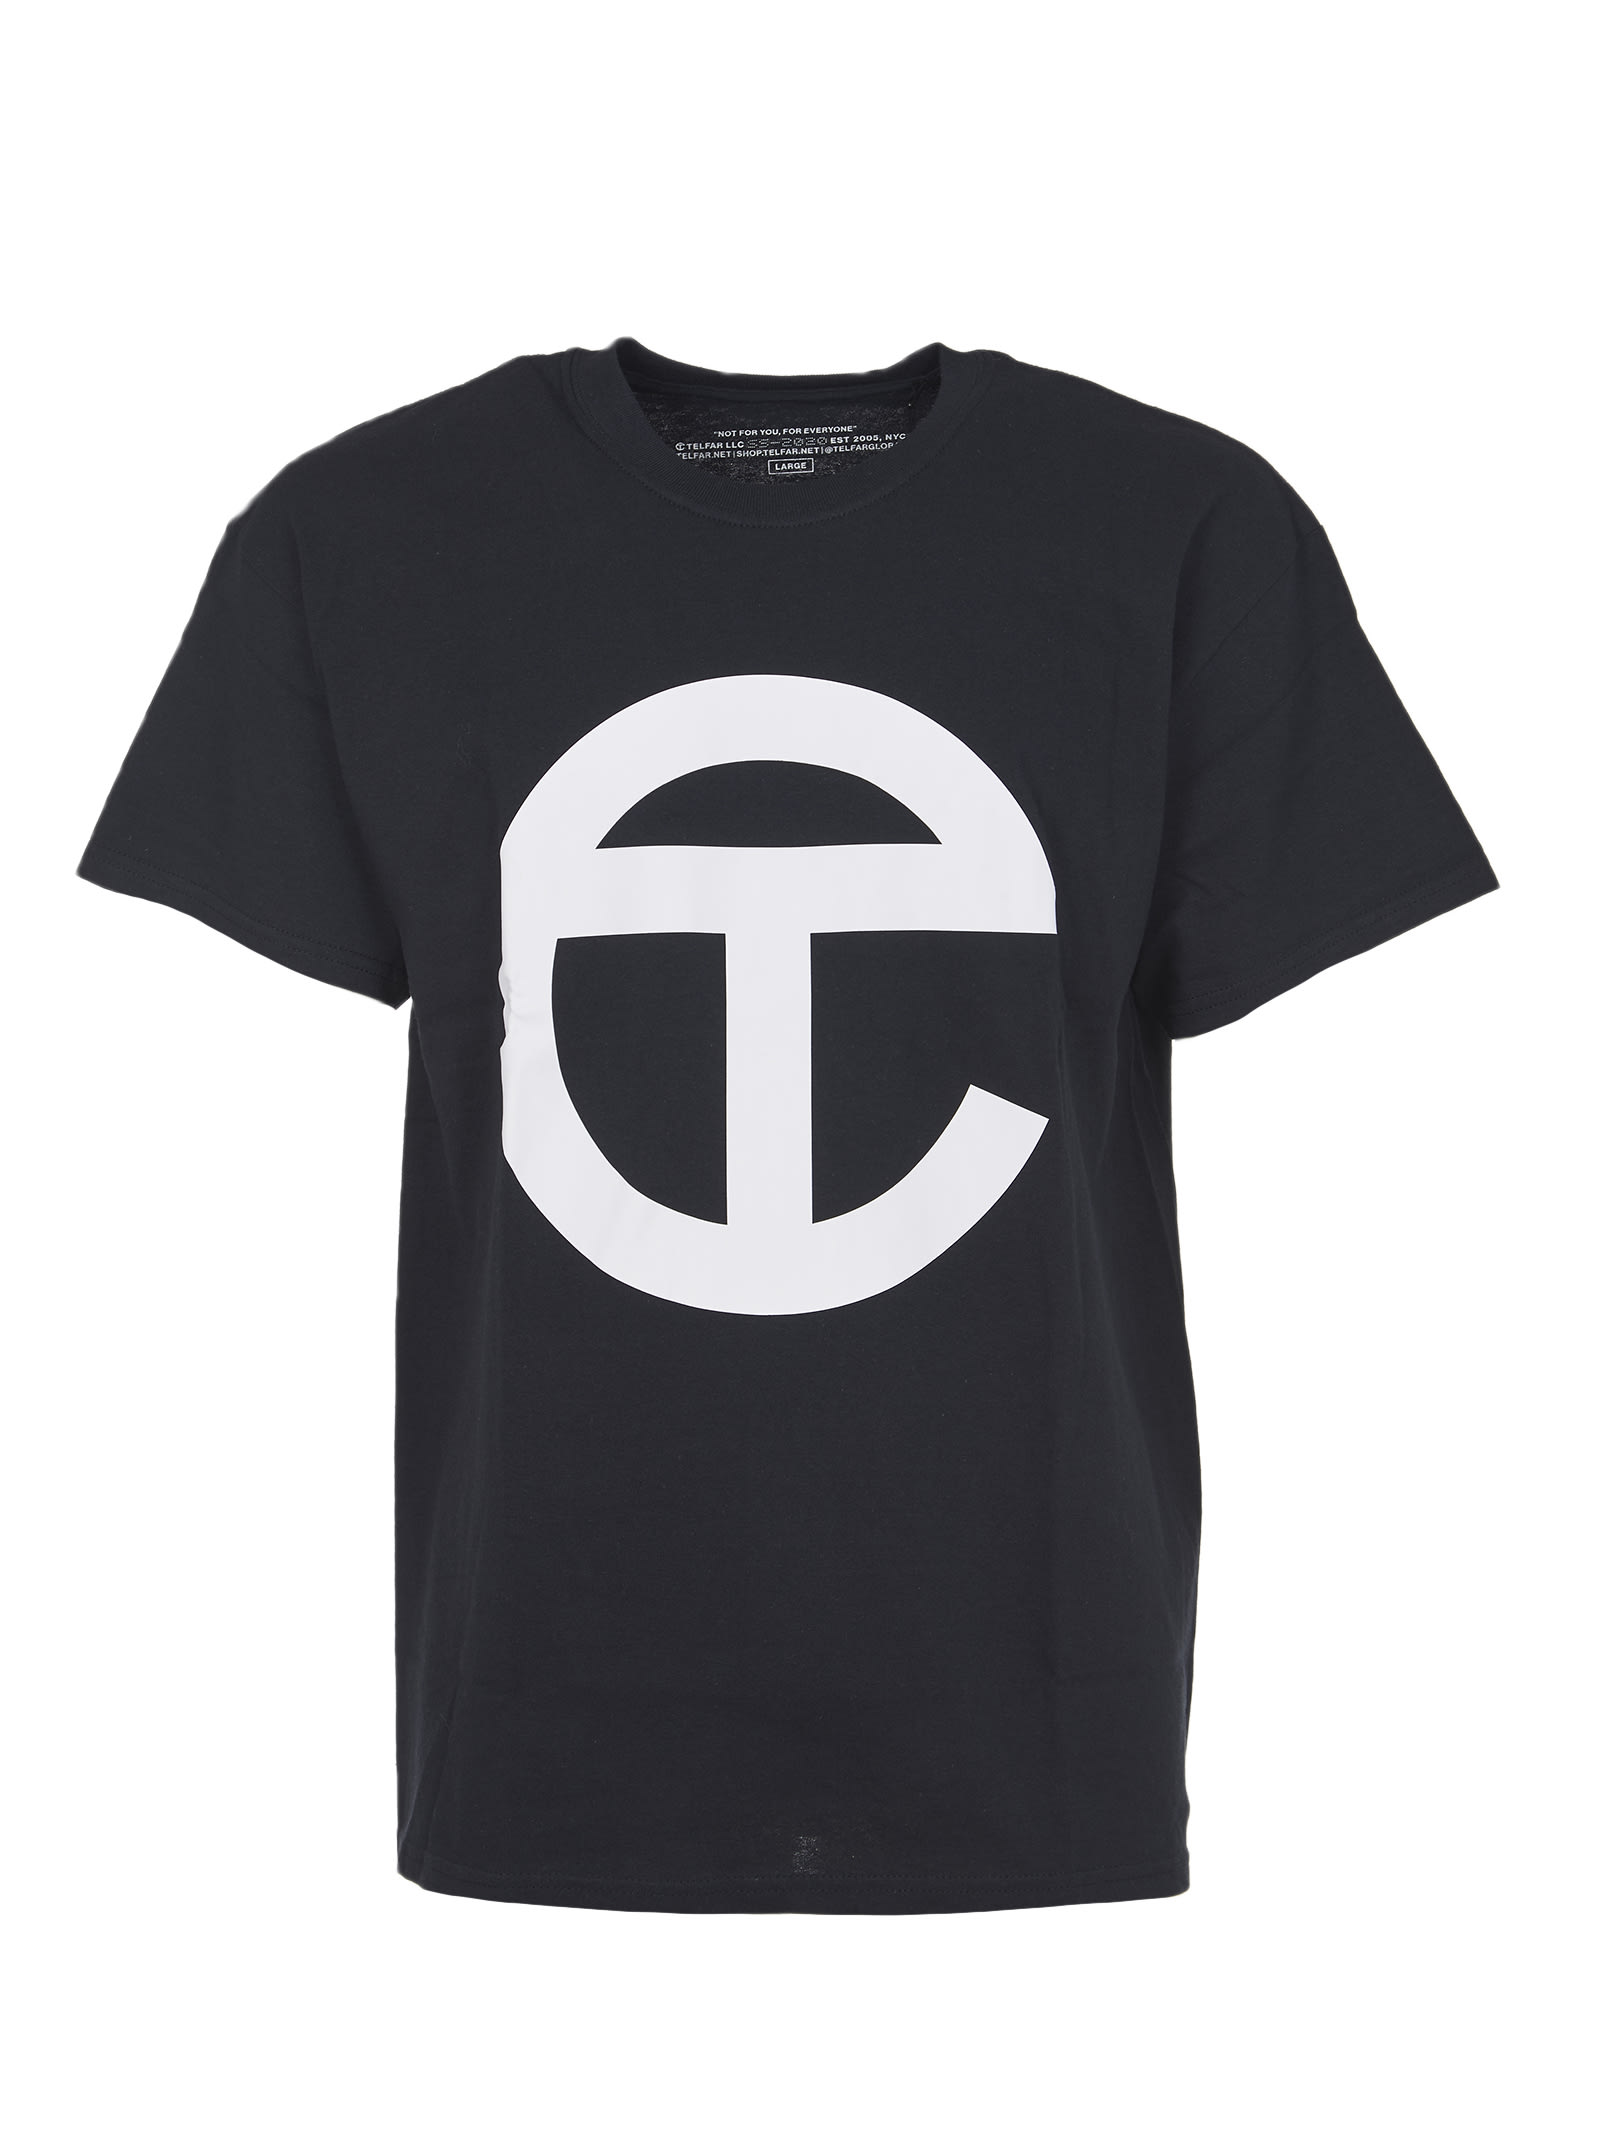 Telfar Black T-shirt With Logo